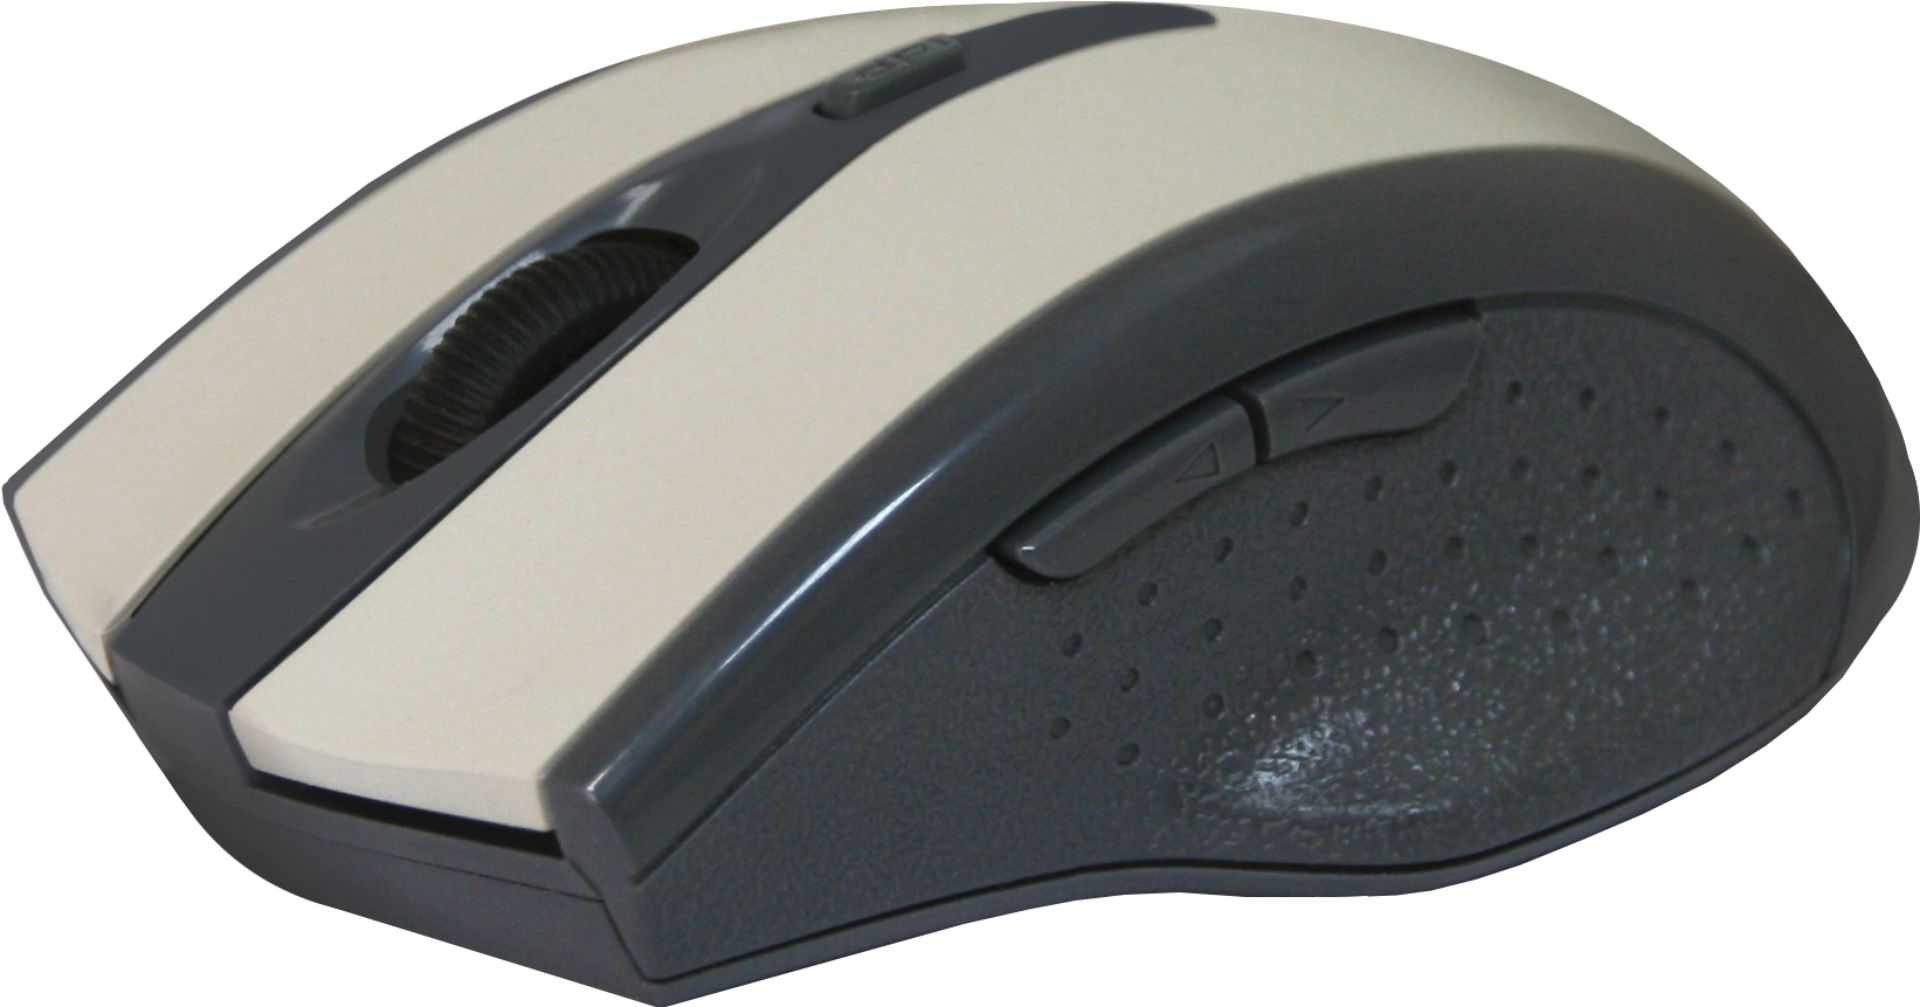 Мышь Defender Accura MM-665 серый компьютерная мышь defender mm 665 красный 52668